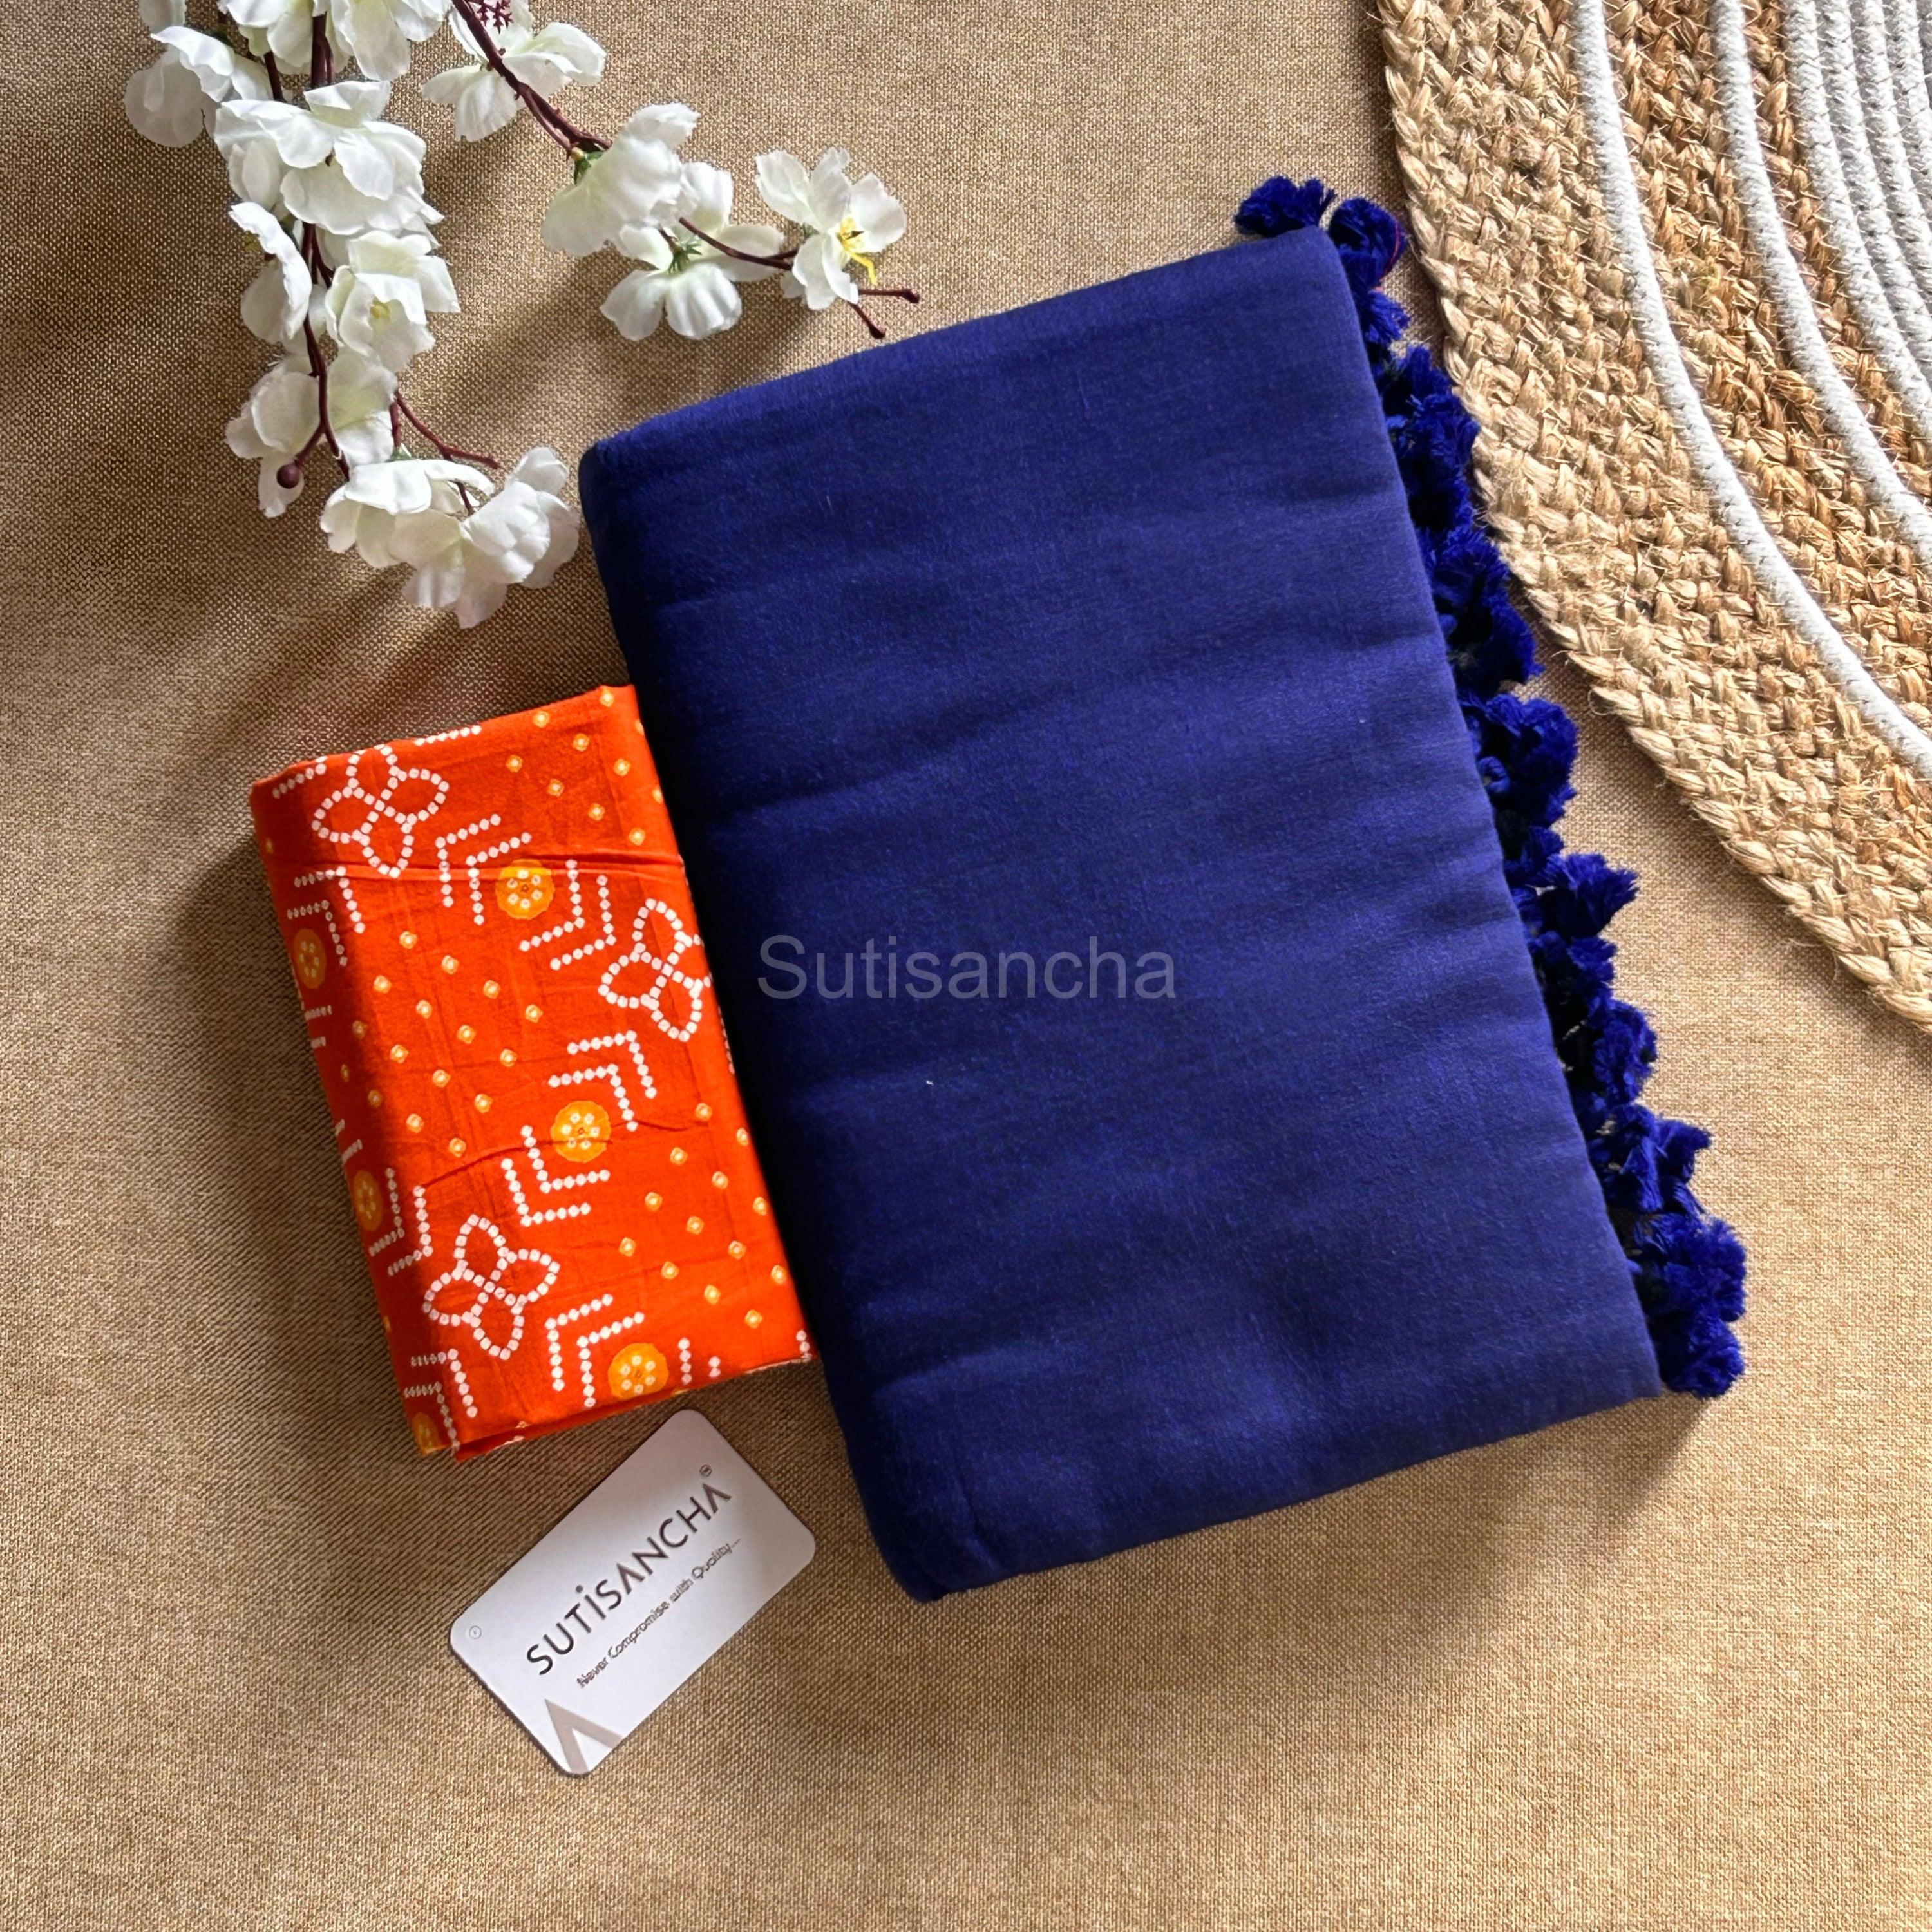 Sutisancha Royalblue Khadi Saree & Cotton Design Blouse - Suti Sancha